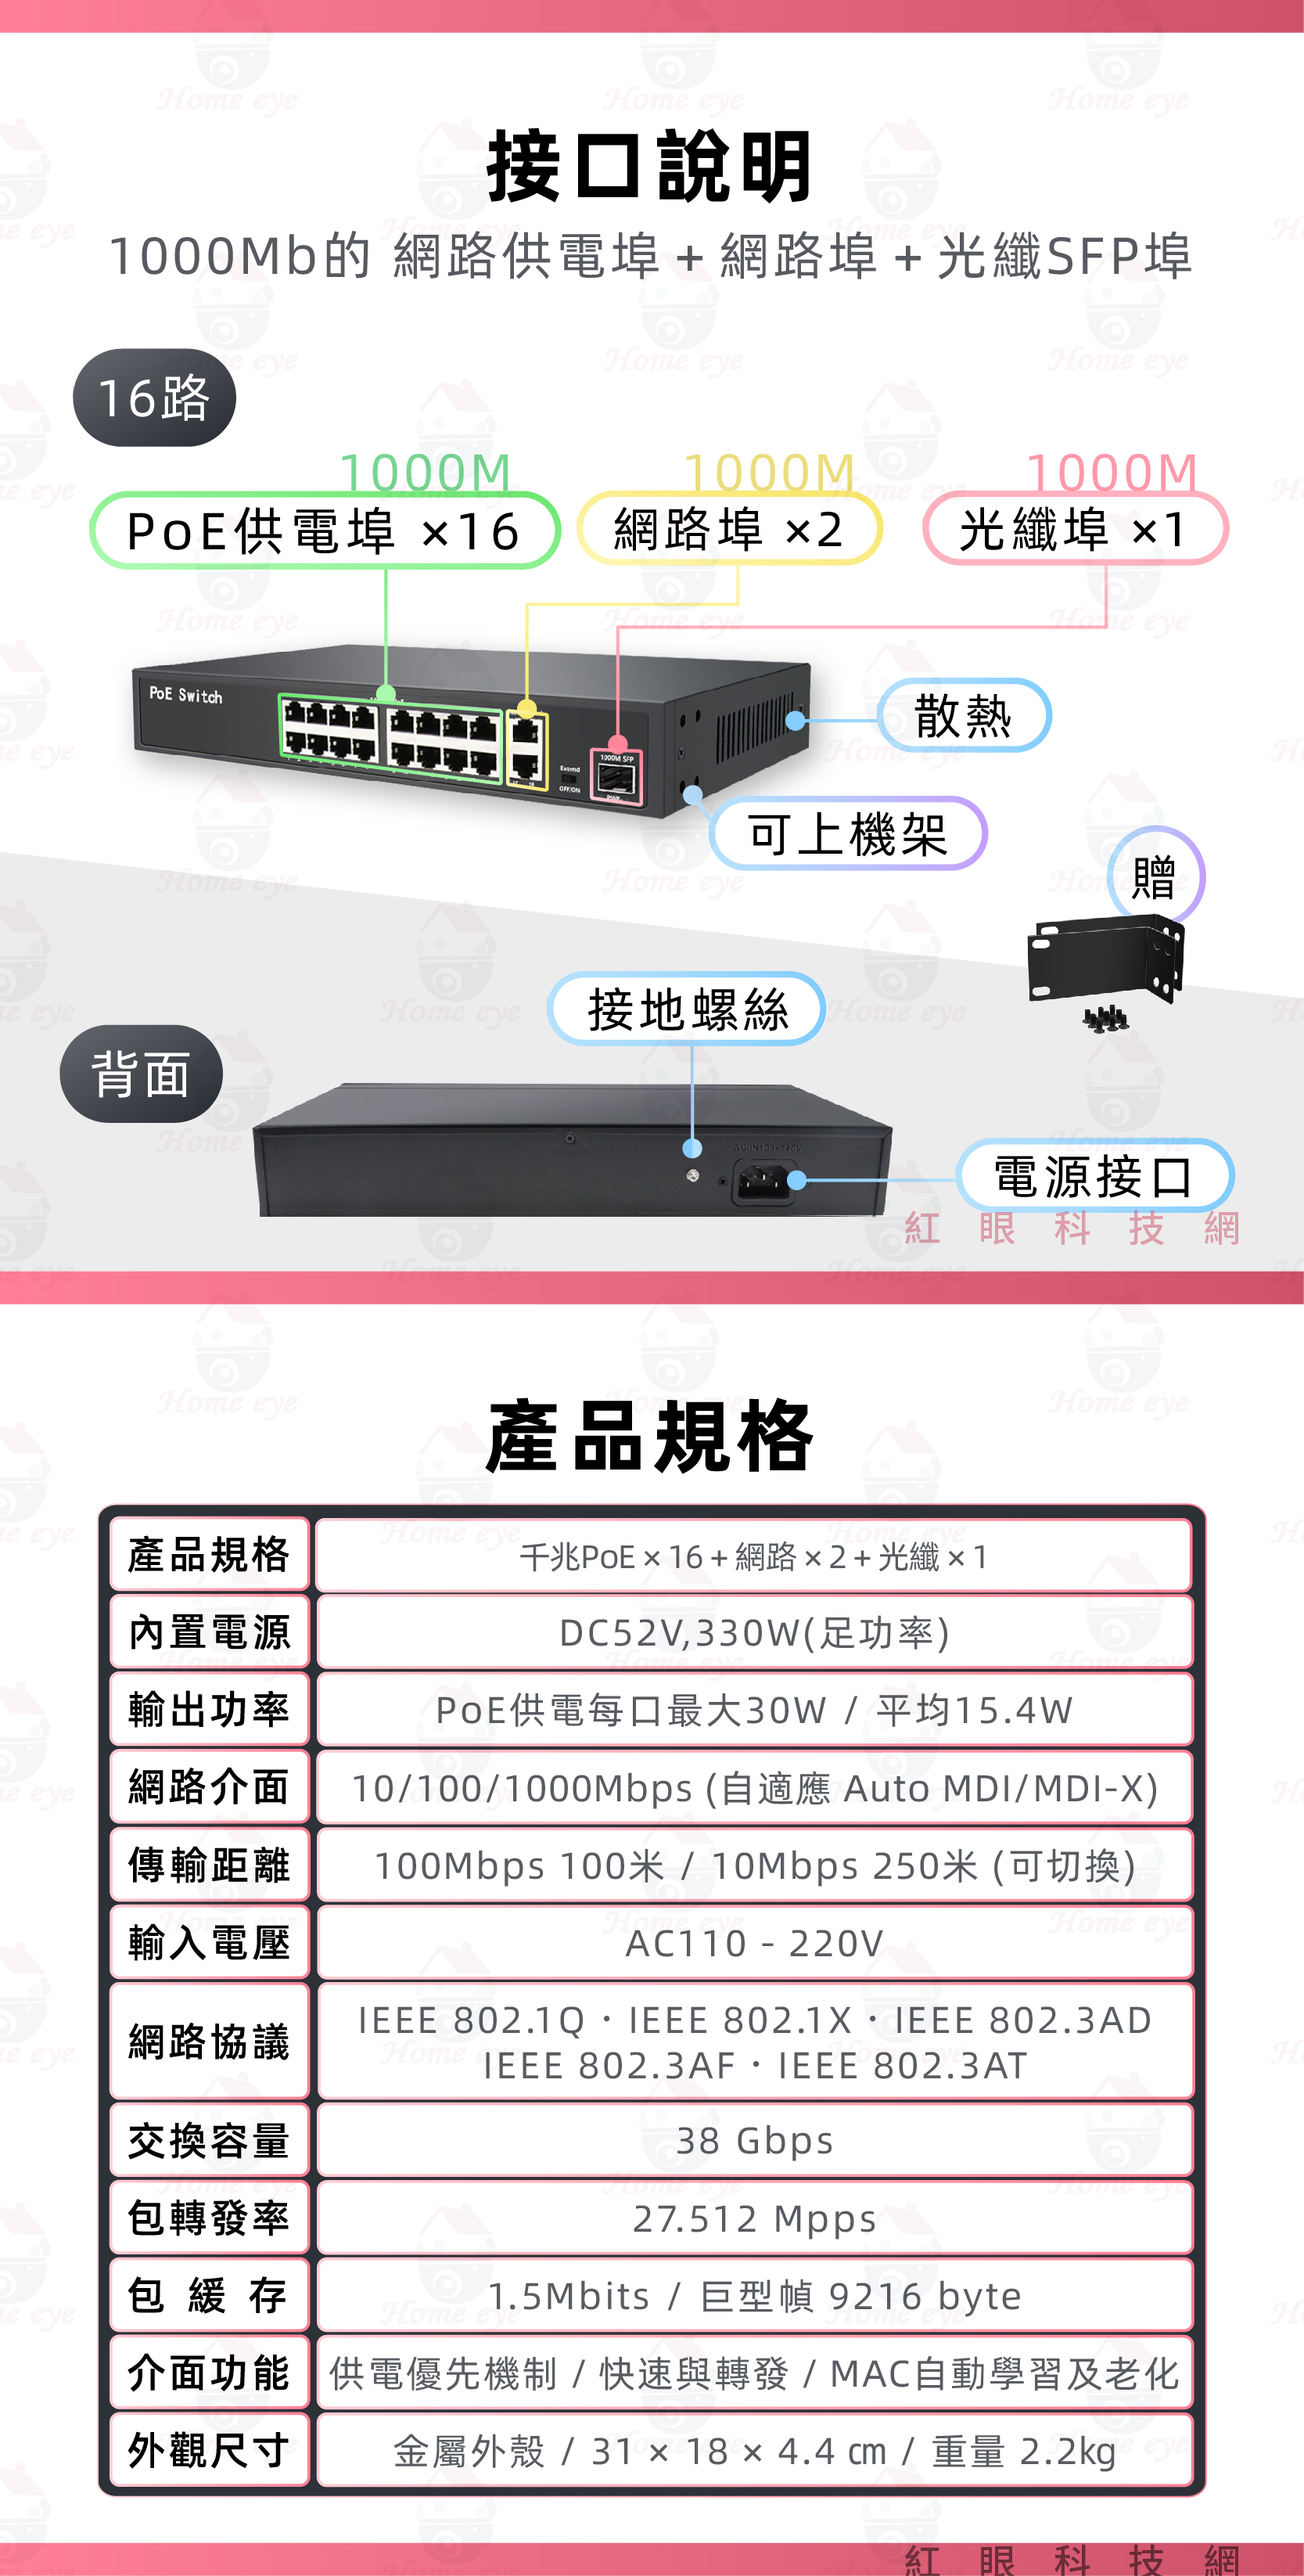 PoE供電埠+網路埠+光纖SFP埠 ★ 過載保護、隨插即用、高性能、低功耗